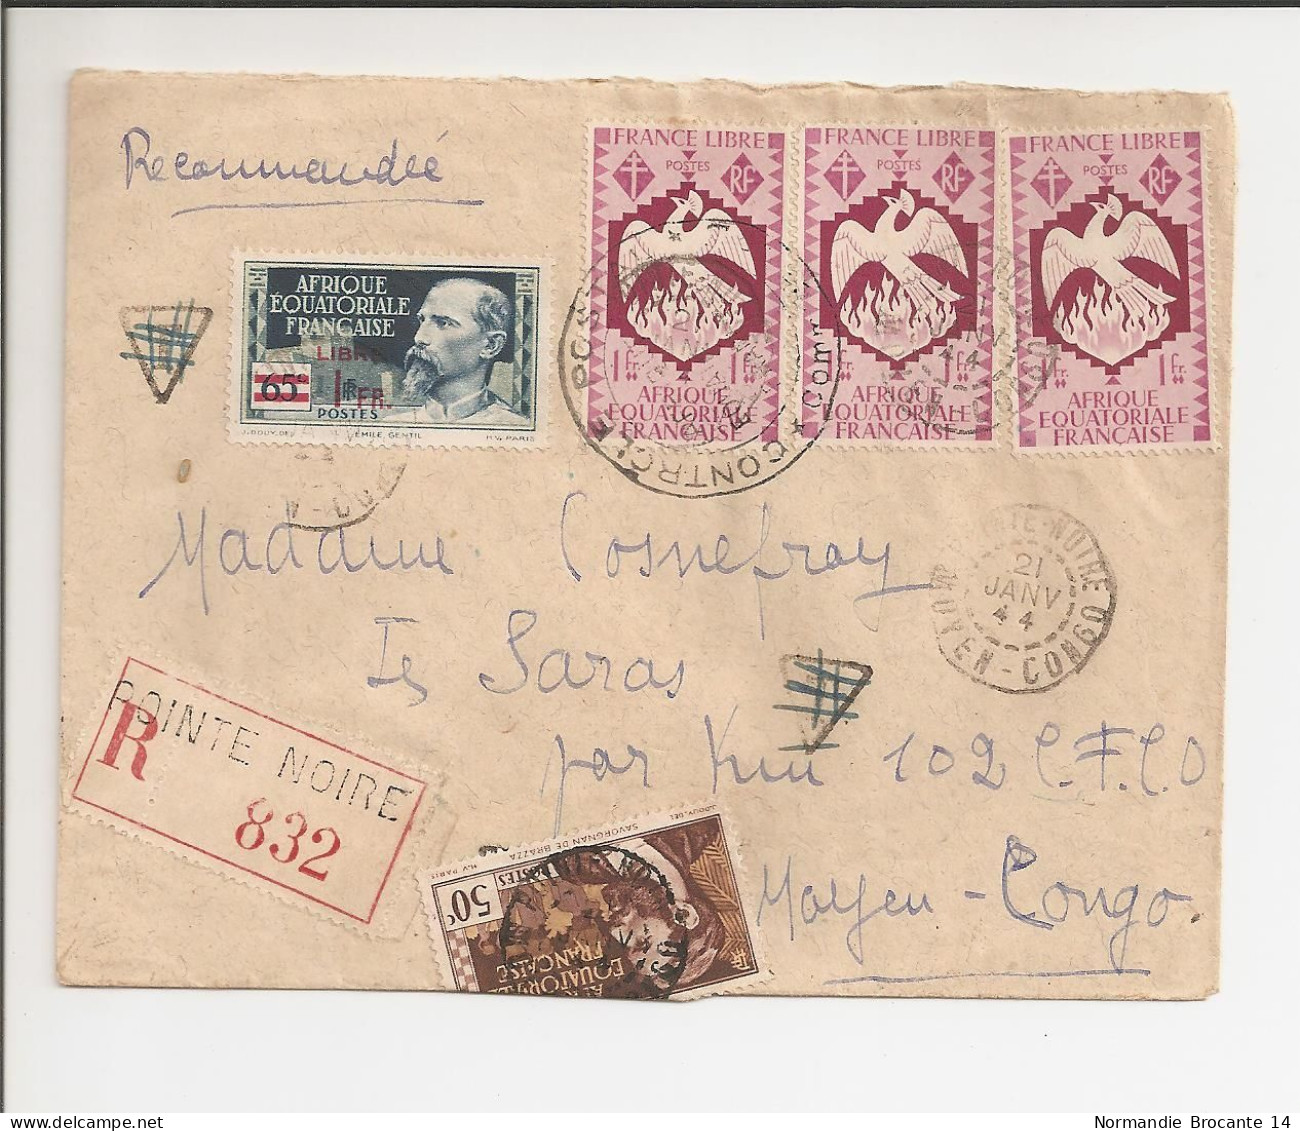 Lettre Recommandée AEF (Moyen Congo) Janvier 1944 - Timbre AEF France Libre - Covers & Documents